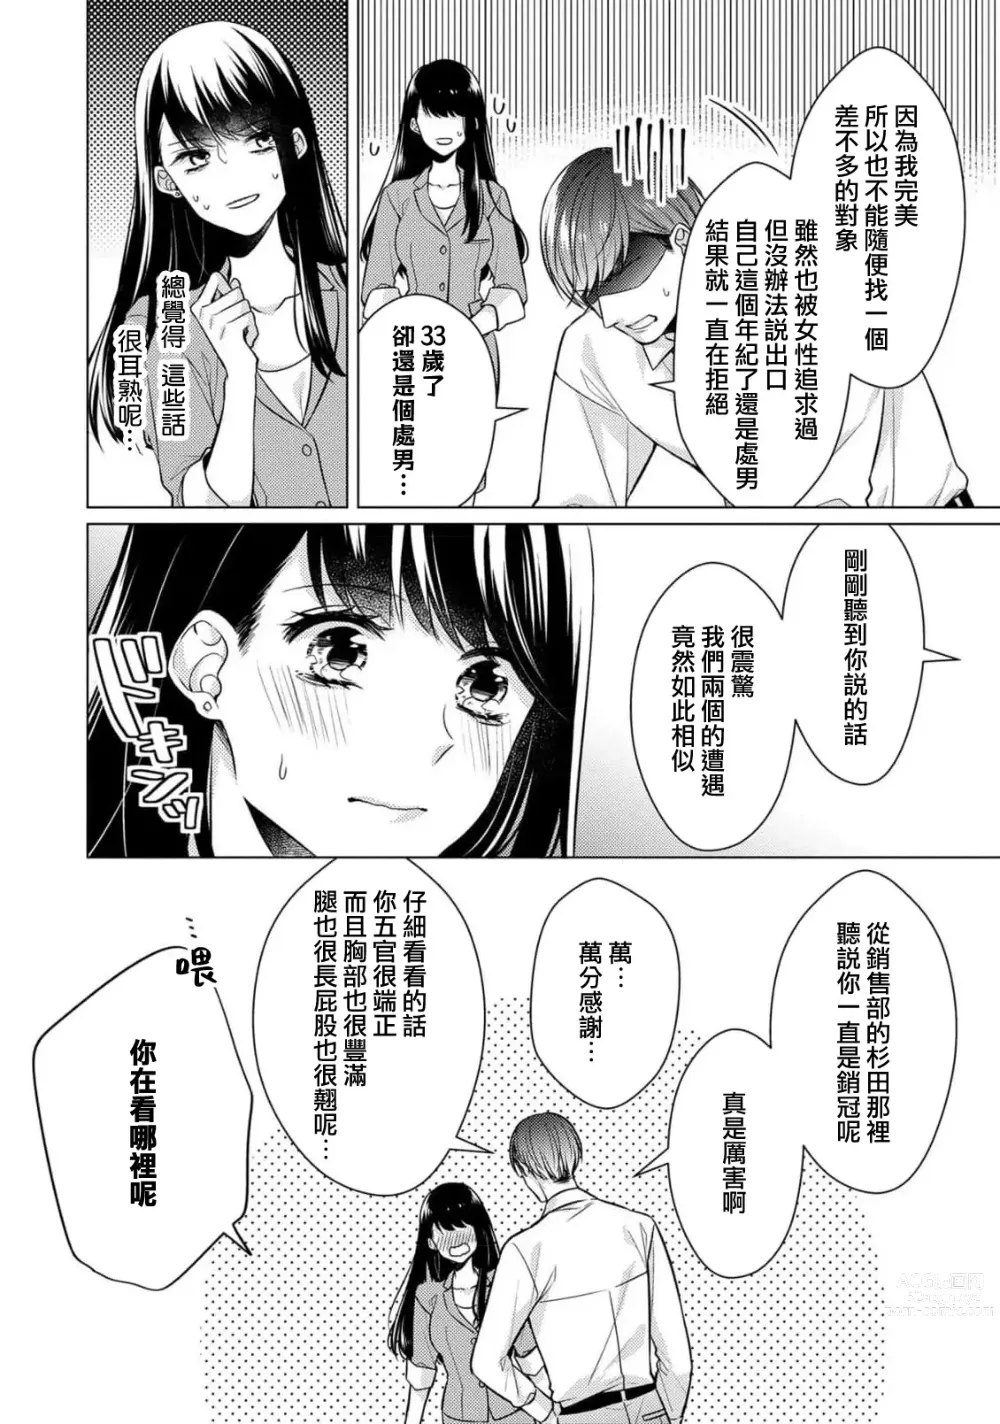 Page 19 of manga 宠爱王子和处女少女~30岁还是处女，这一次和真壁社长签订了炮友契约~ 1-5 end